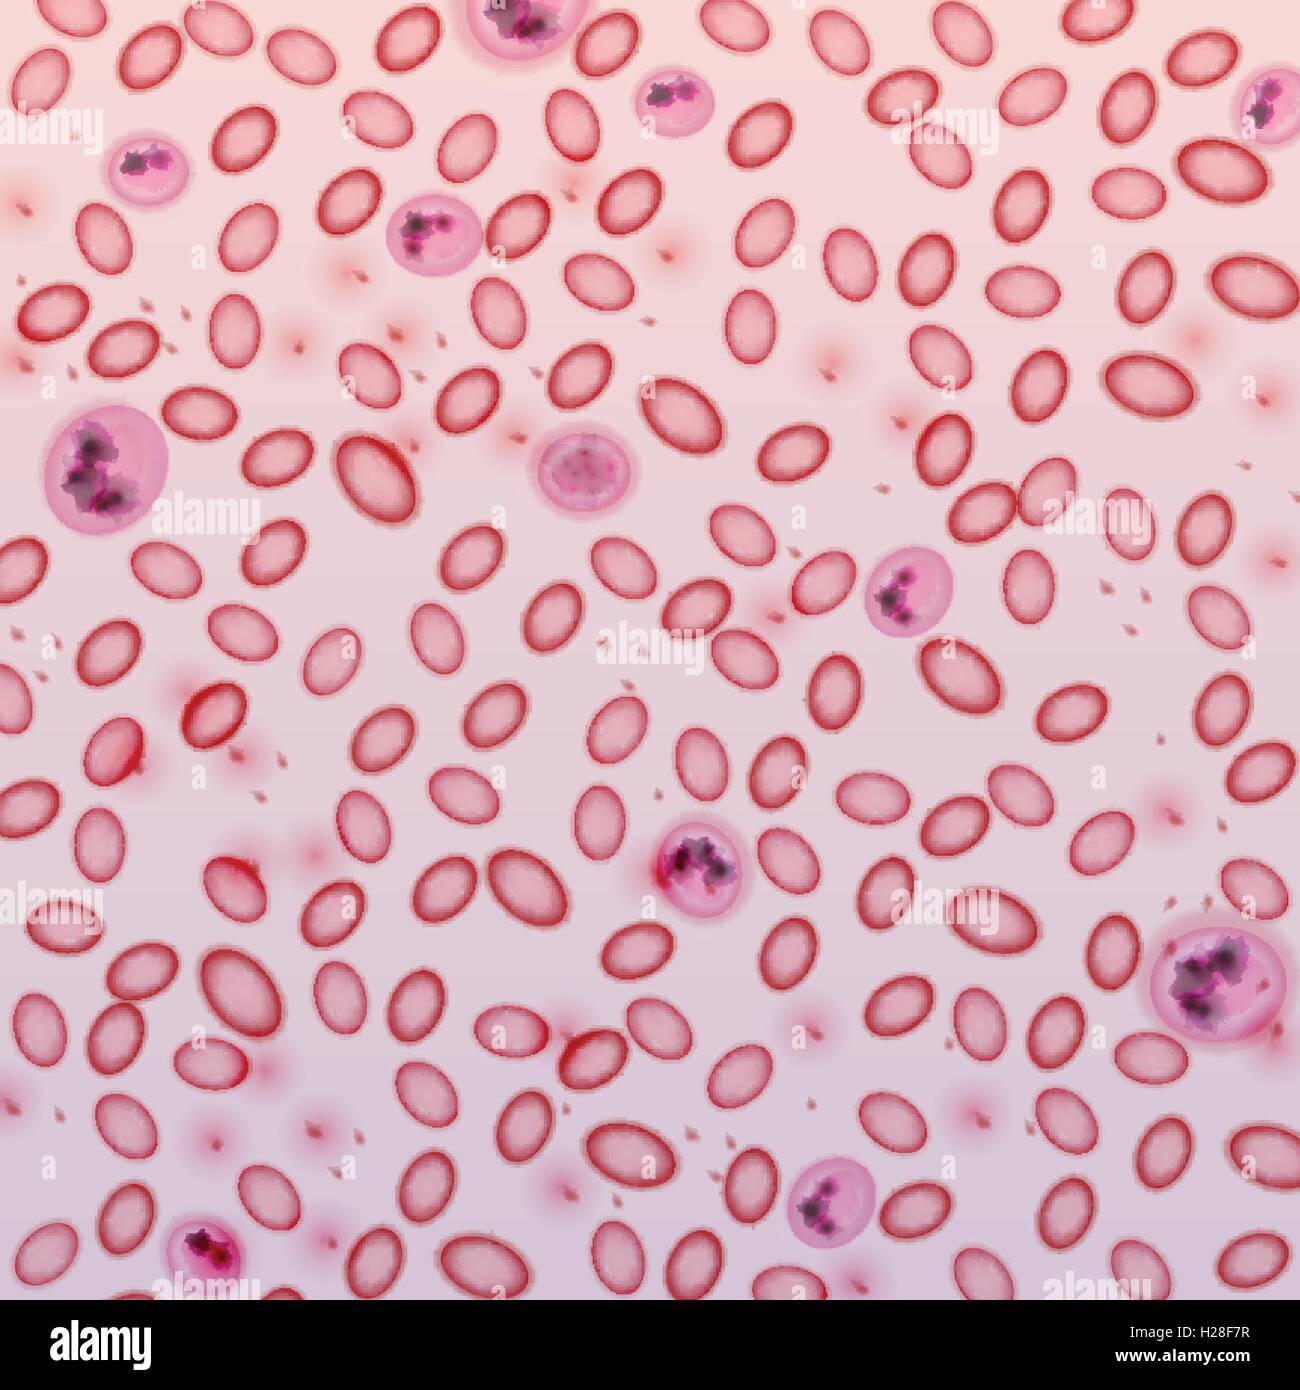 Blood Cells in Plasma - Vector Illustration Stock Vector